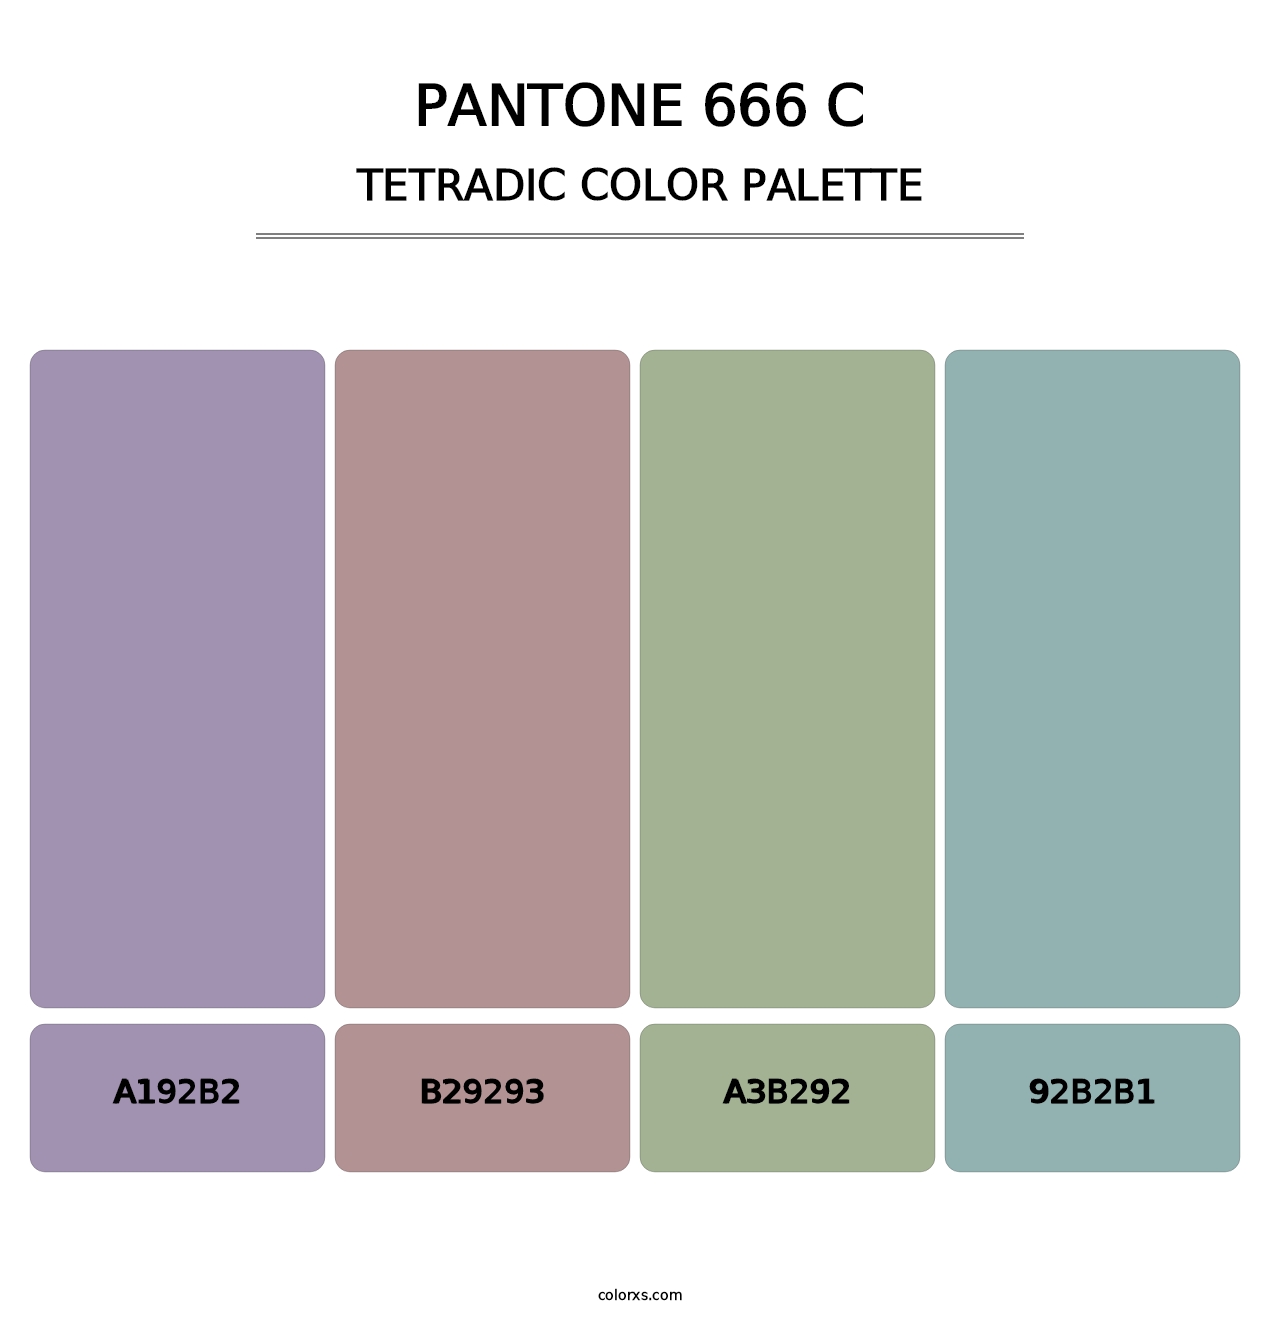 PANTONE 666 C - Tetradic Color Palette